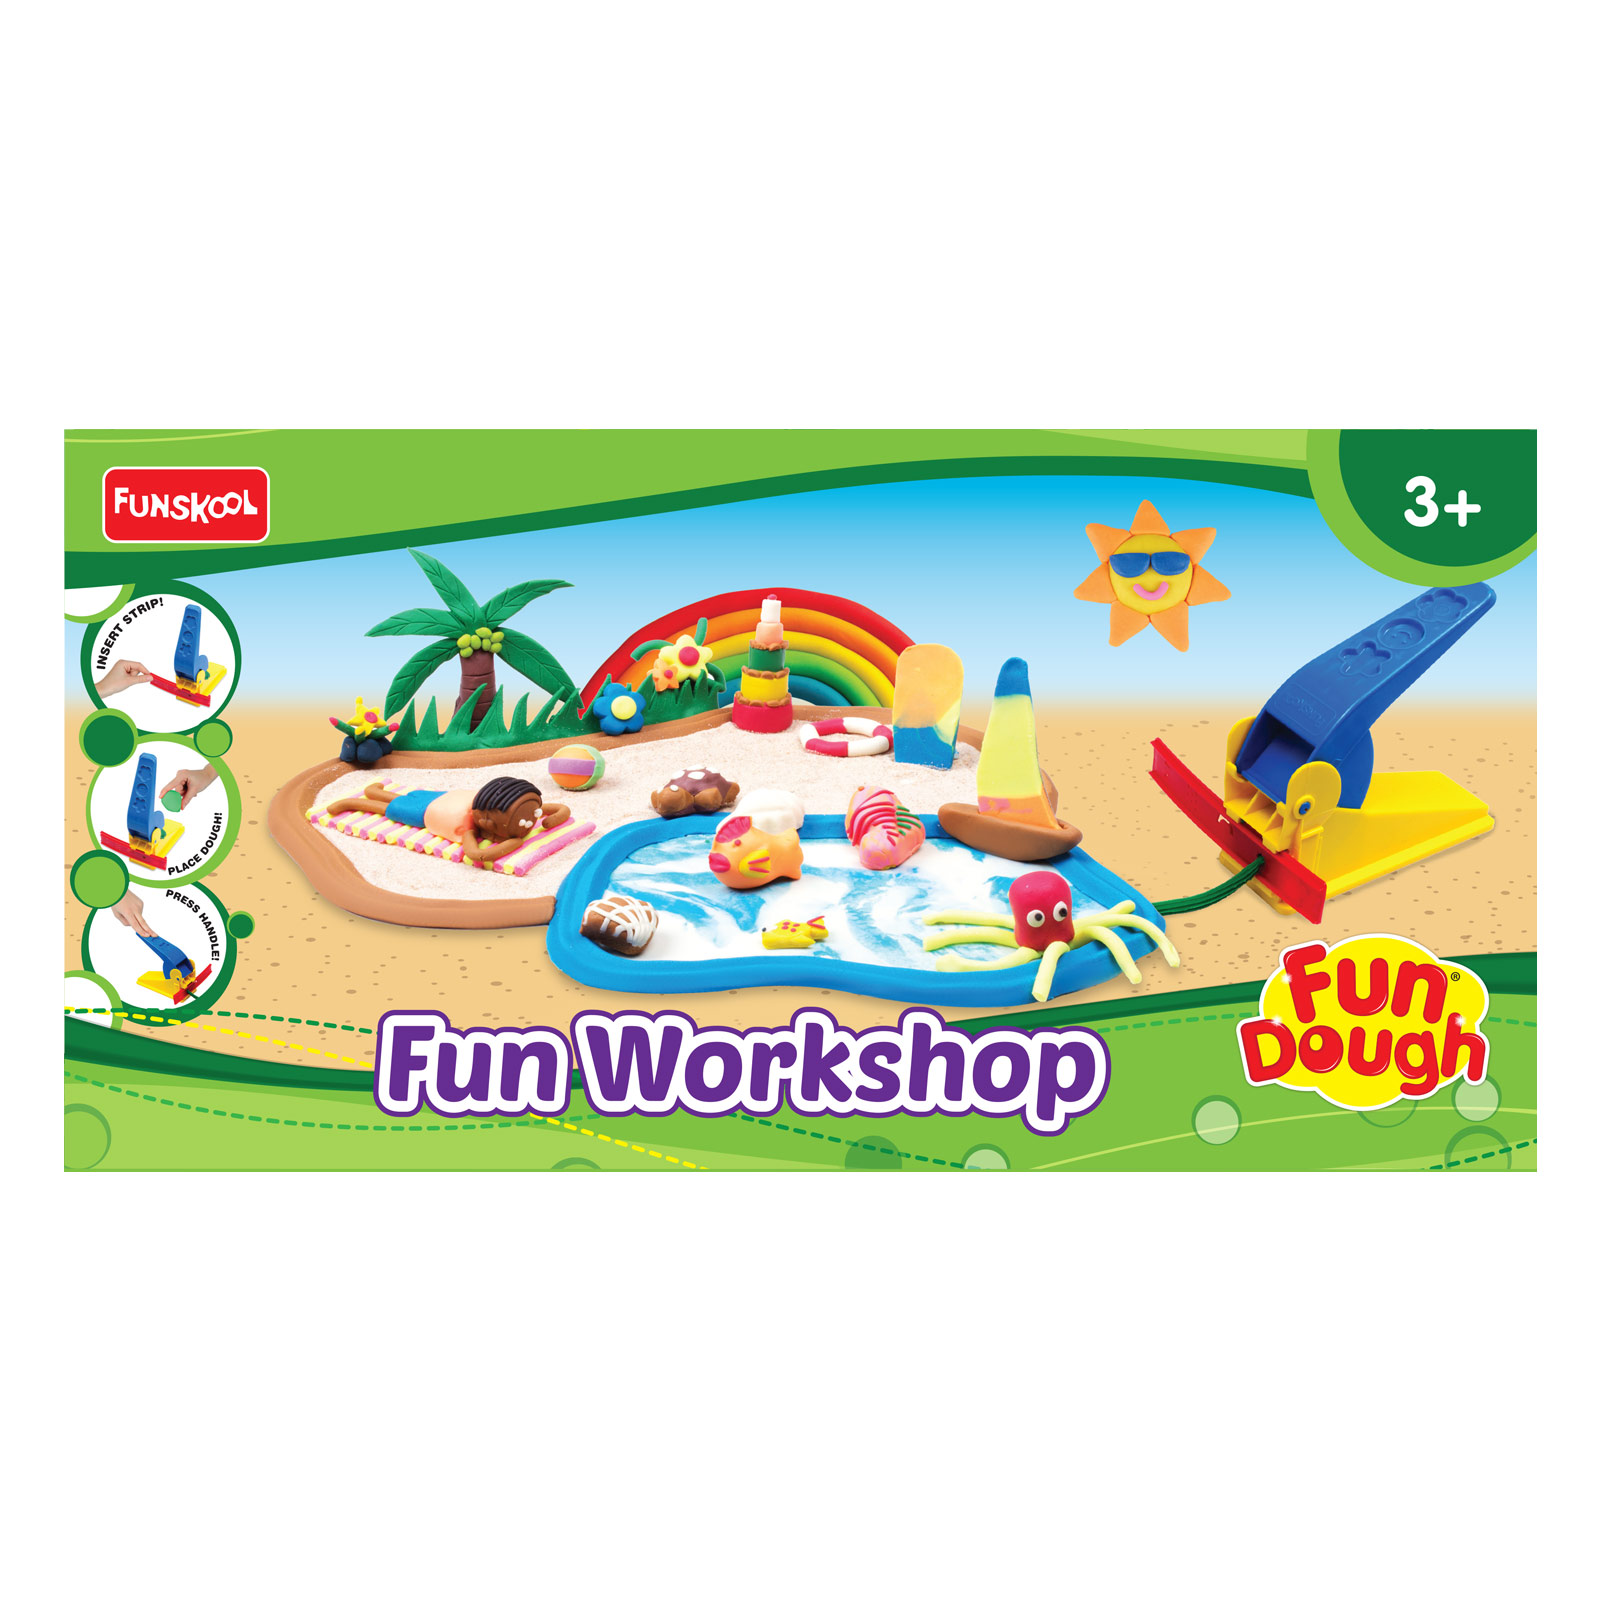 Fun Workshop